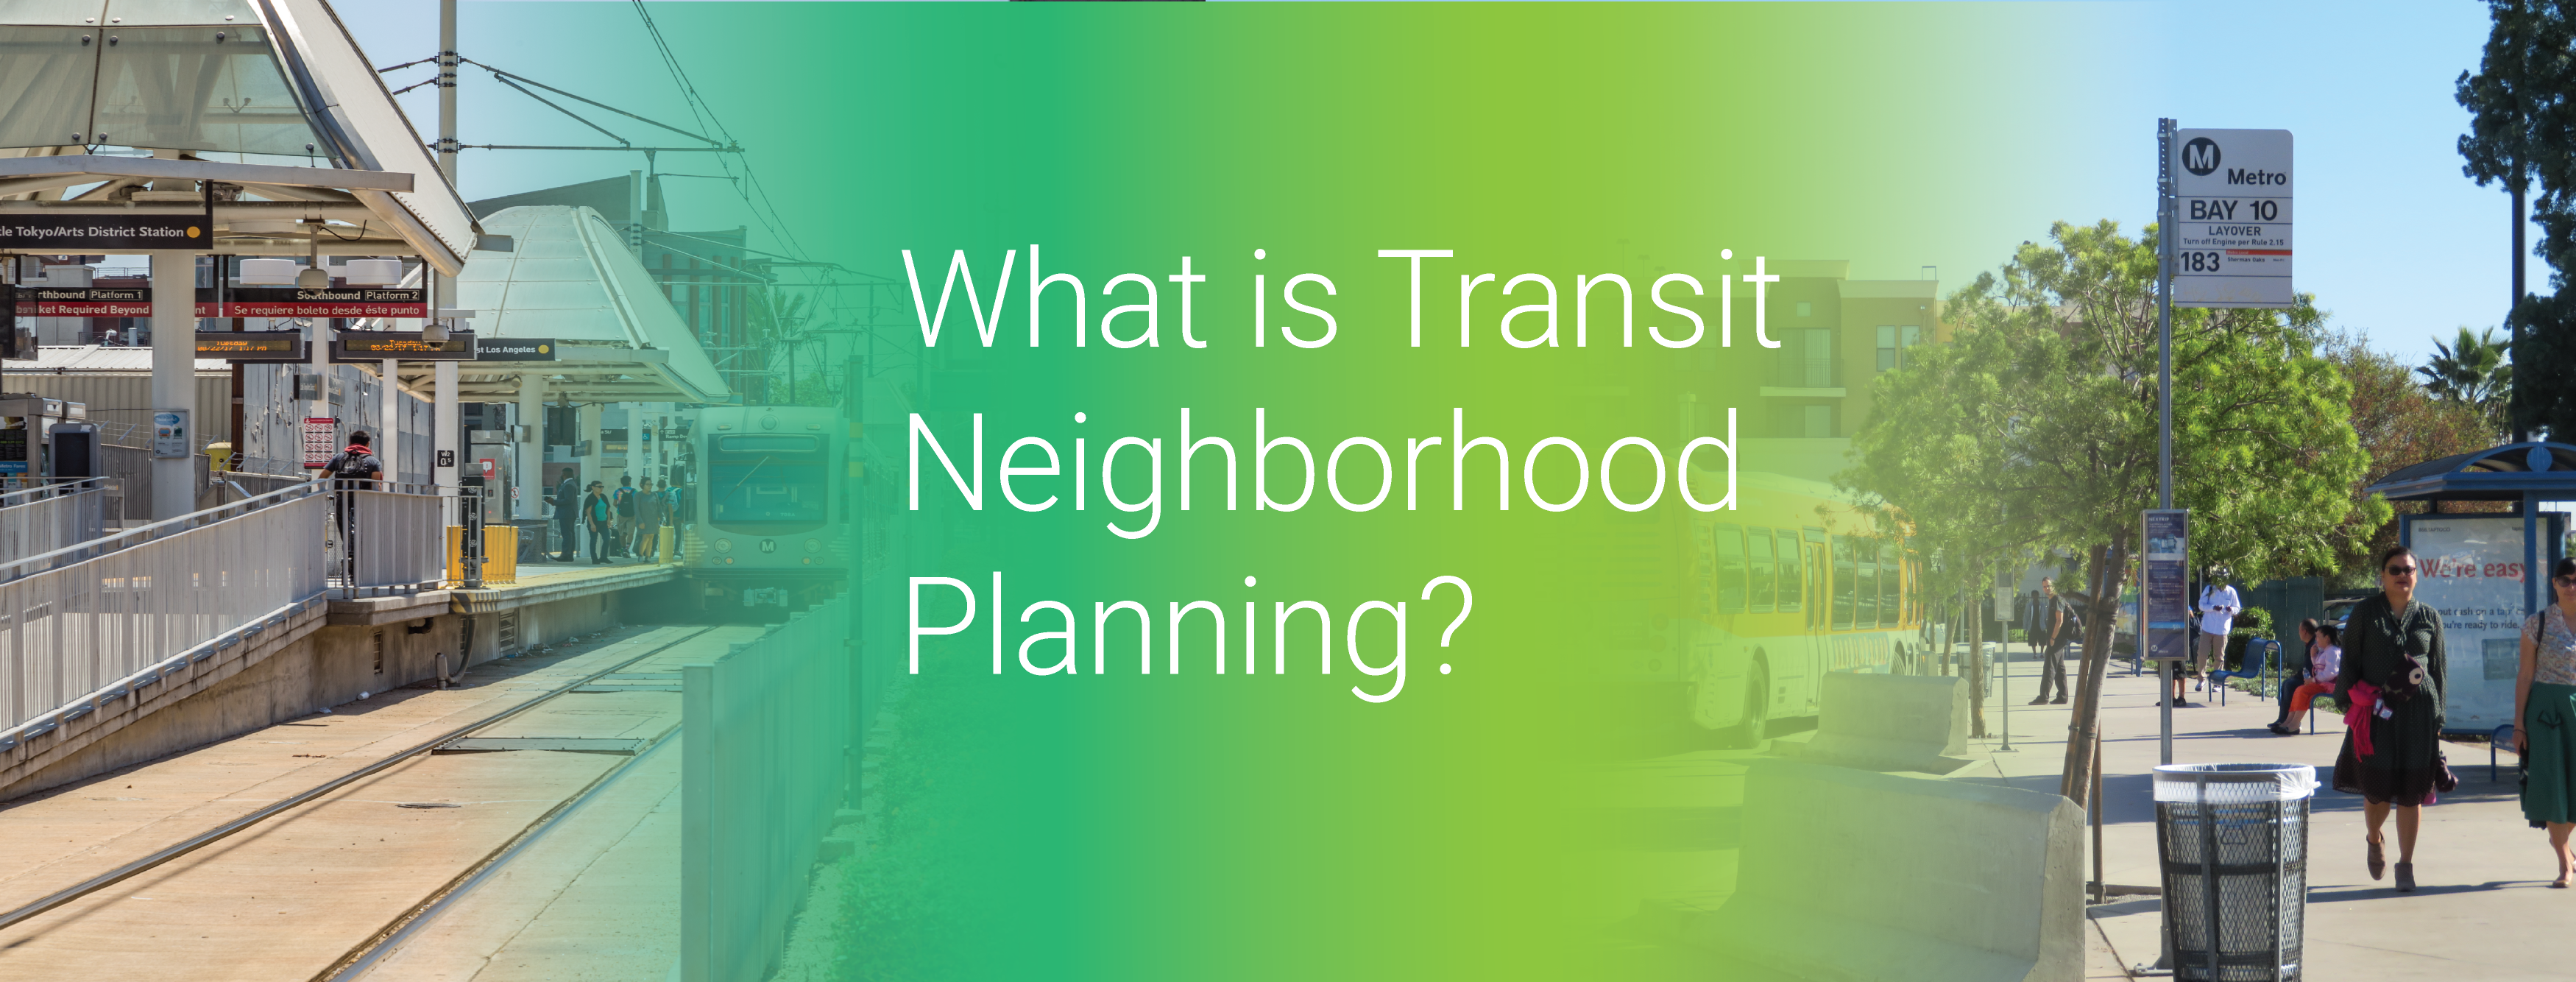 What is Transit Neighborhood Planning?